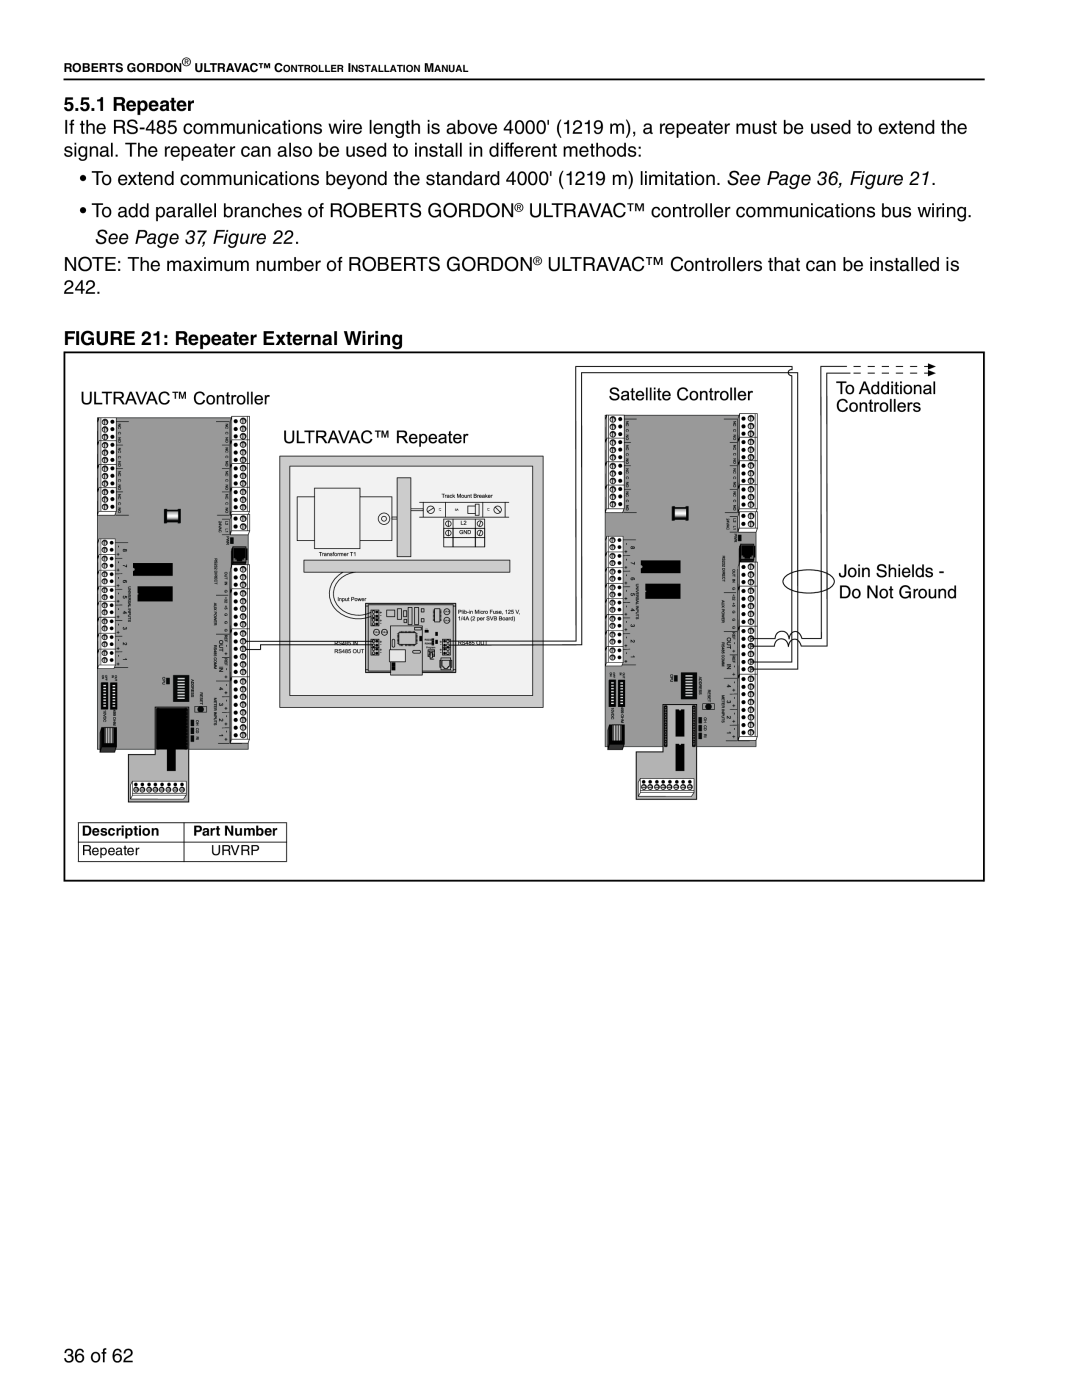 Roberts Gorden 10081601NA Rev H 12/11 service manual Repeater External Wiring 